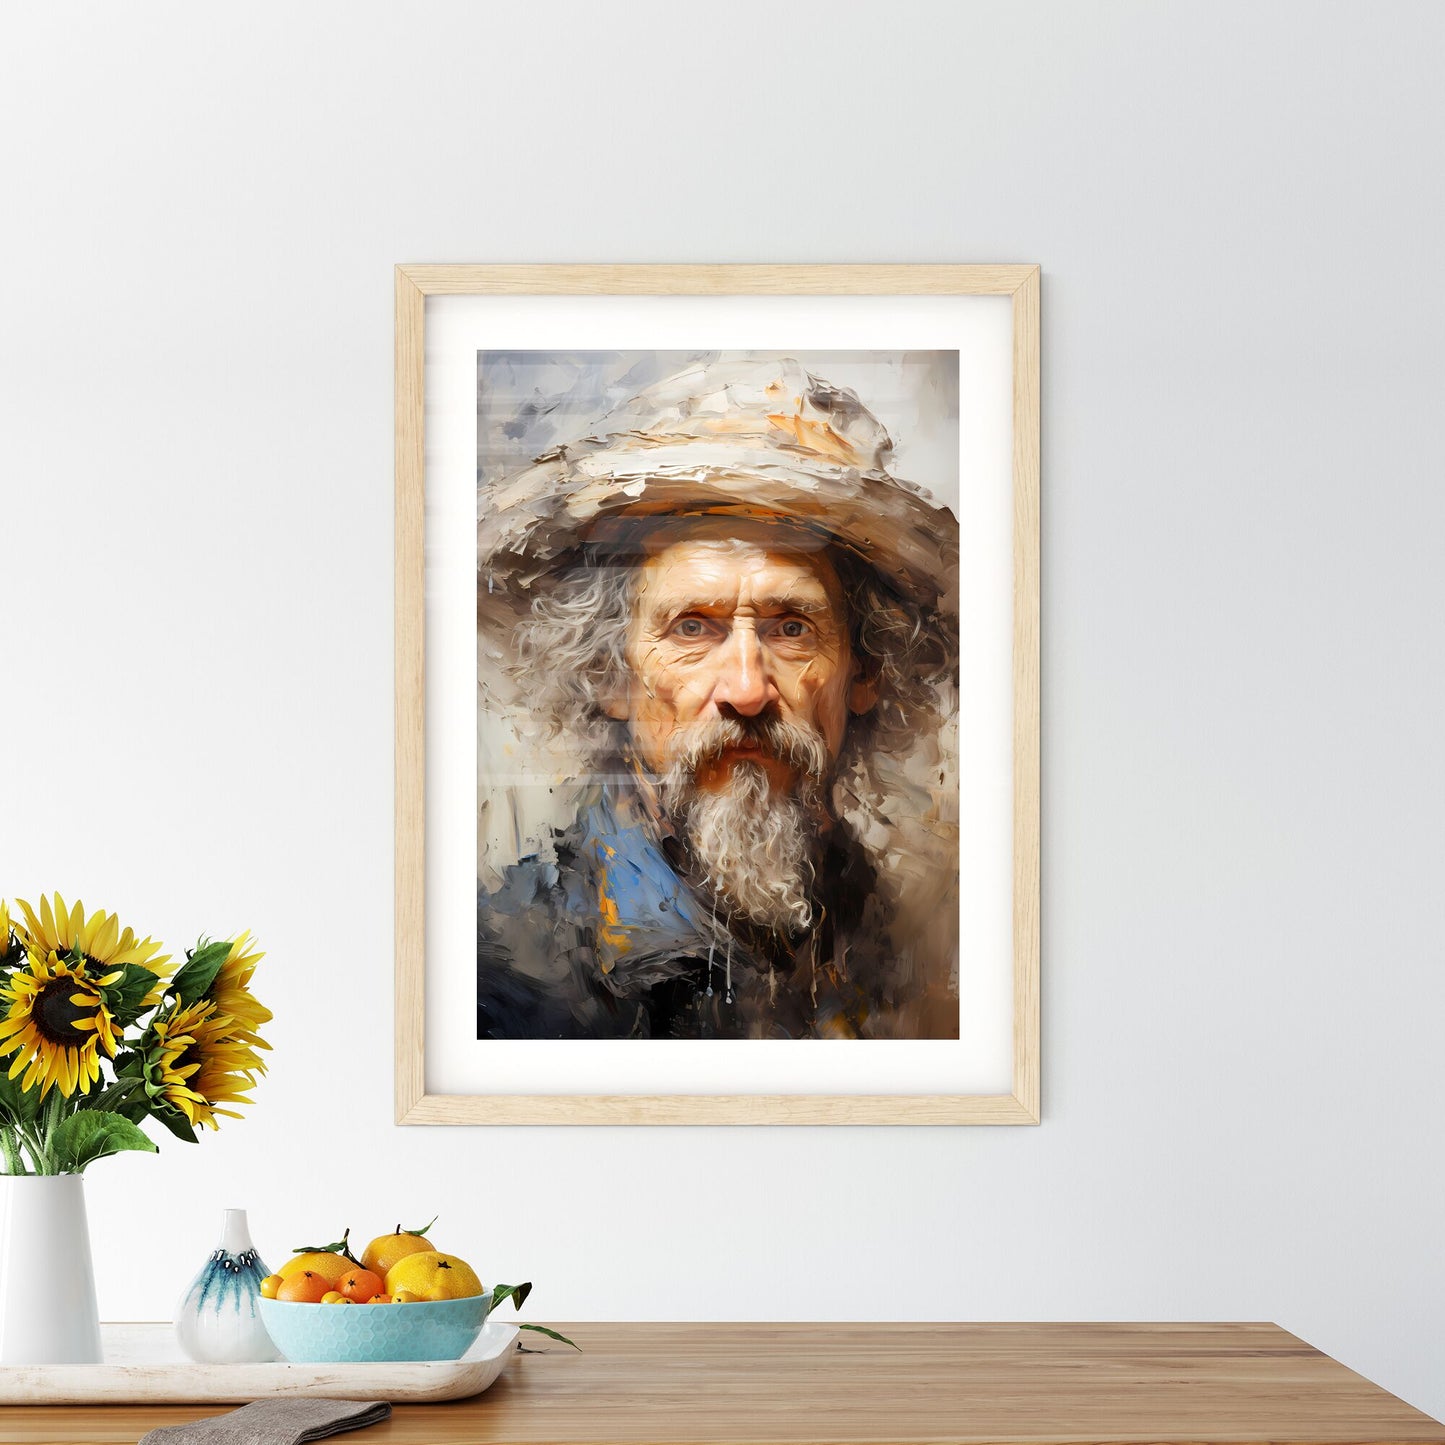 Rembrandt Dutch Golden Age Painter - A Painting Of A Man With A Hat Default Title